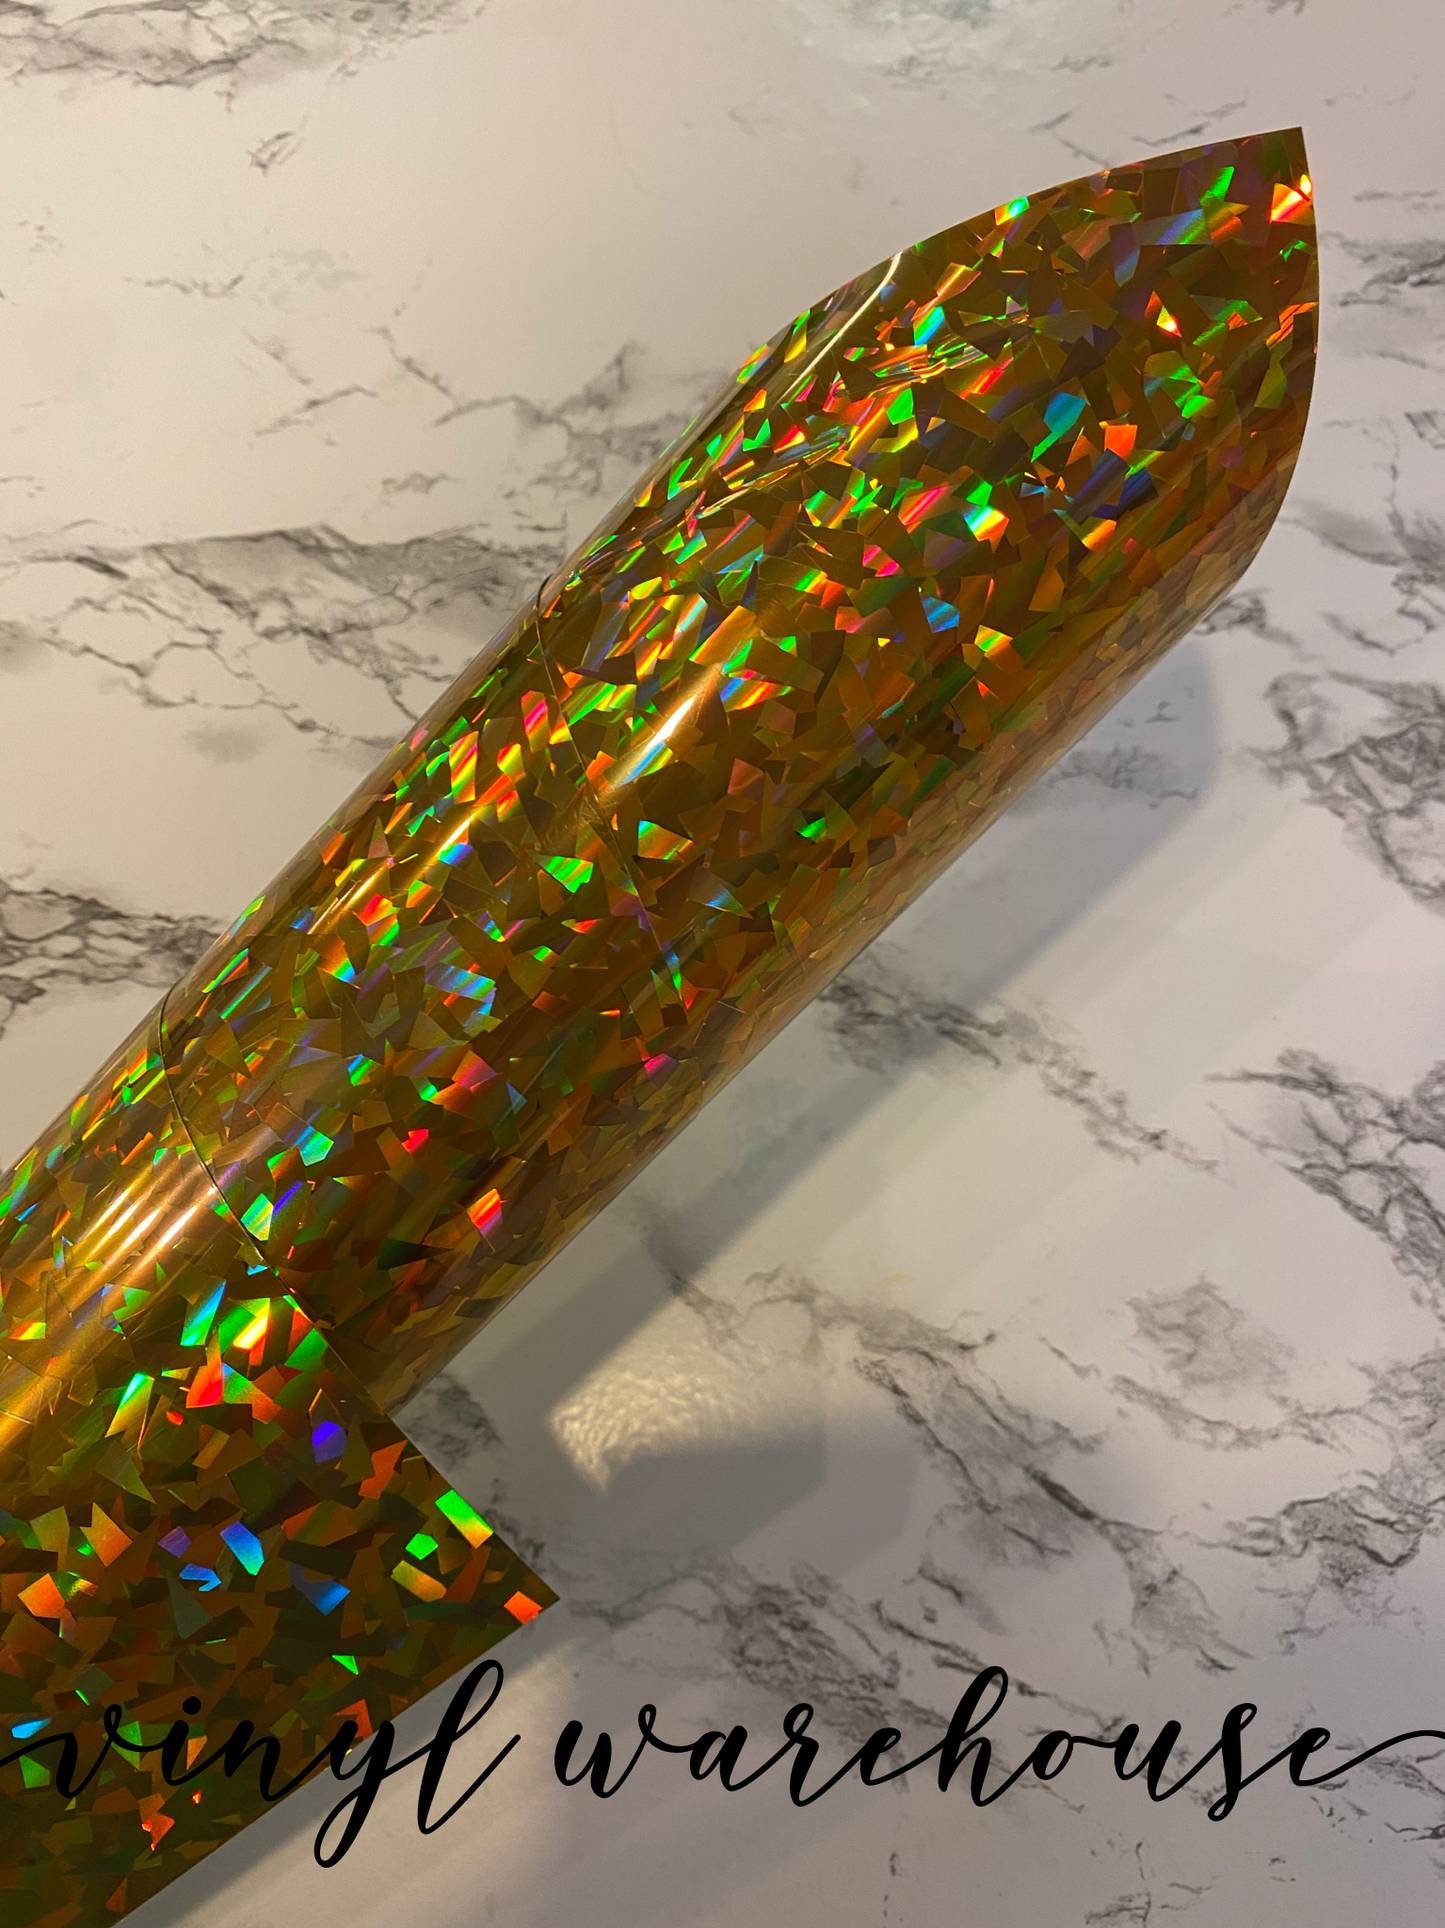 Siser Holographic HTV - Gold Crystal